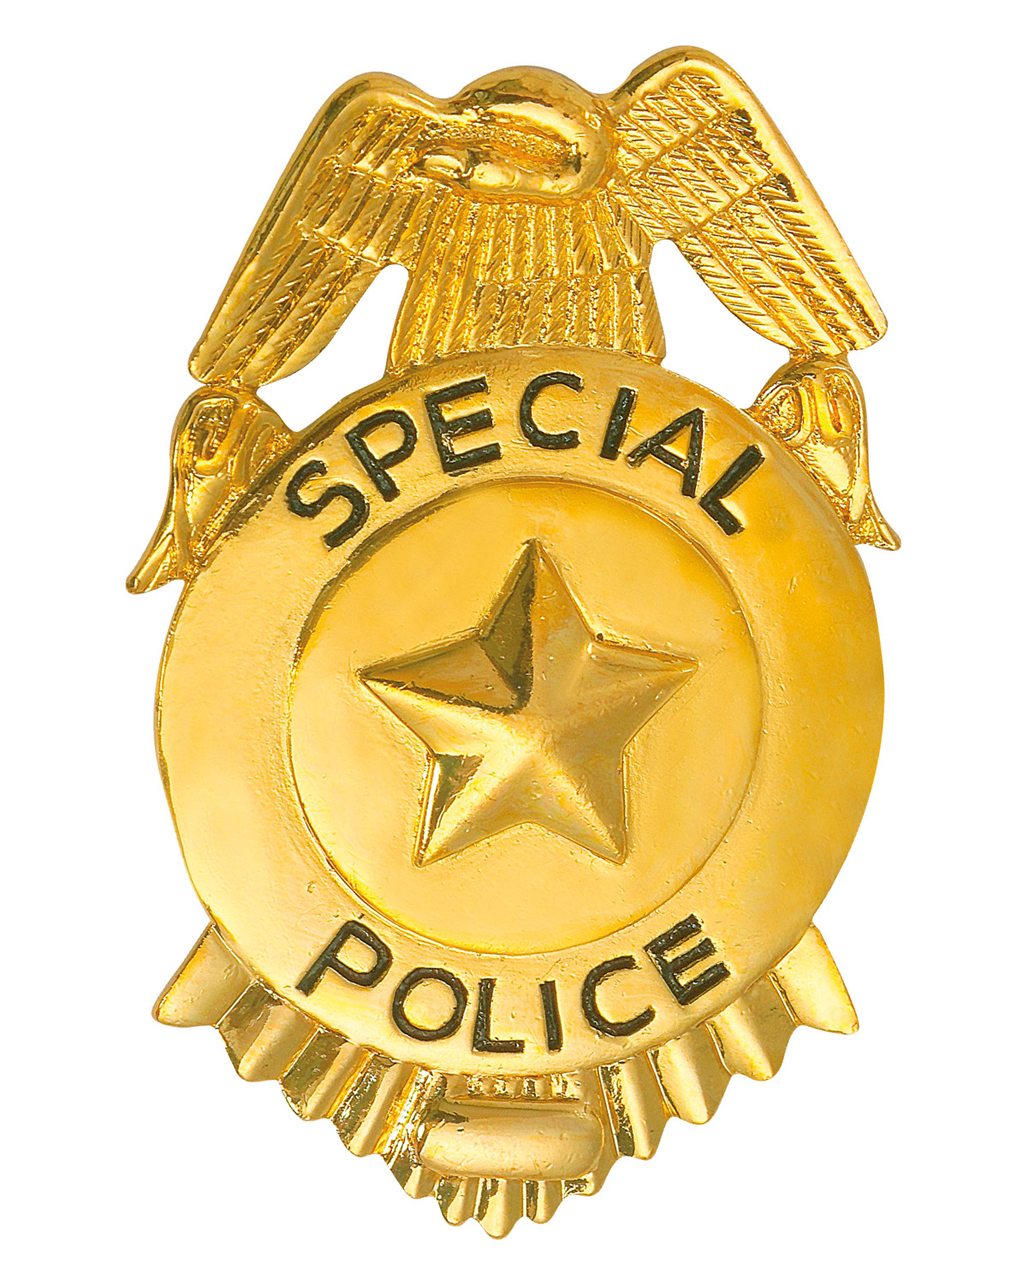 glaenzende fbi police marke polizei marke fbi marke karnevals polizei kostuem zubehoer shimmering fbi police badge 17266 001